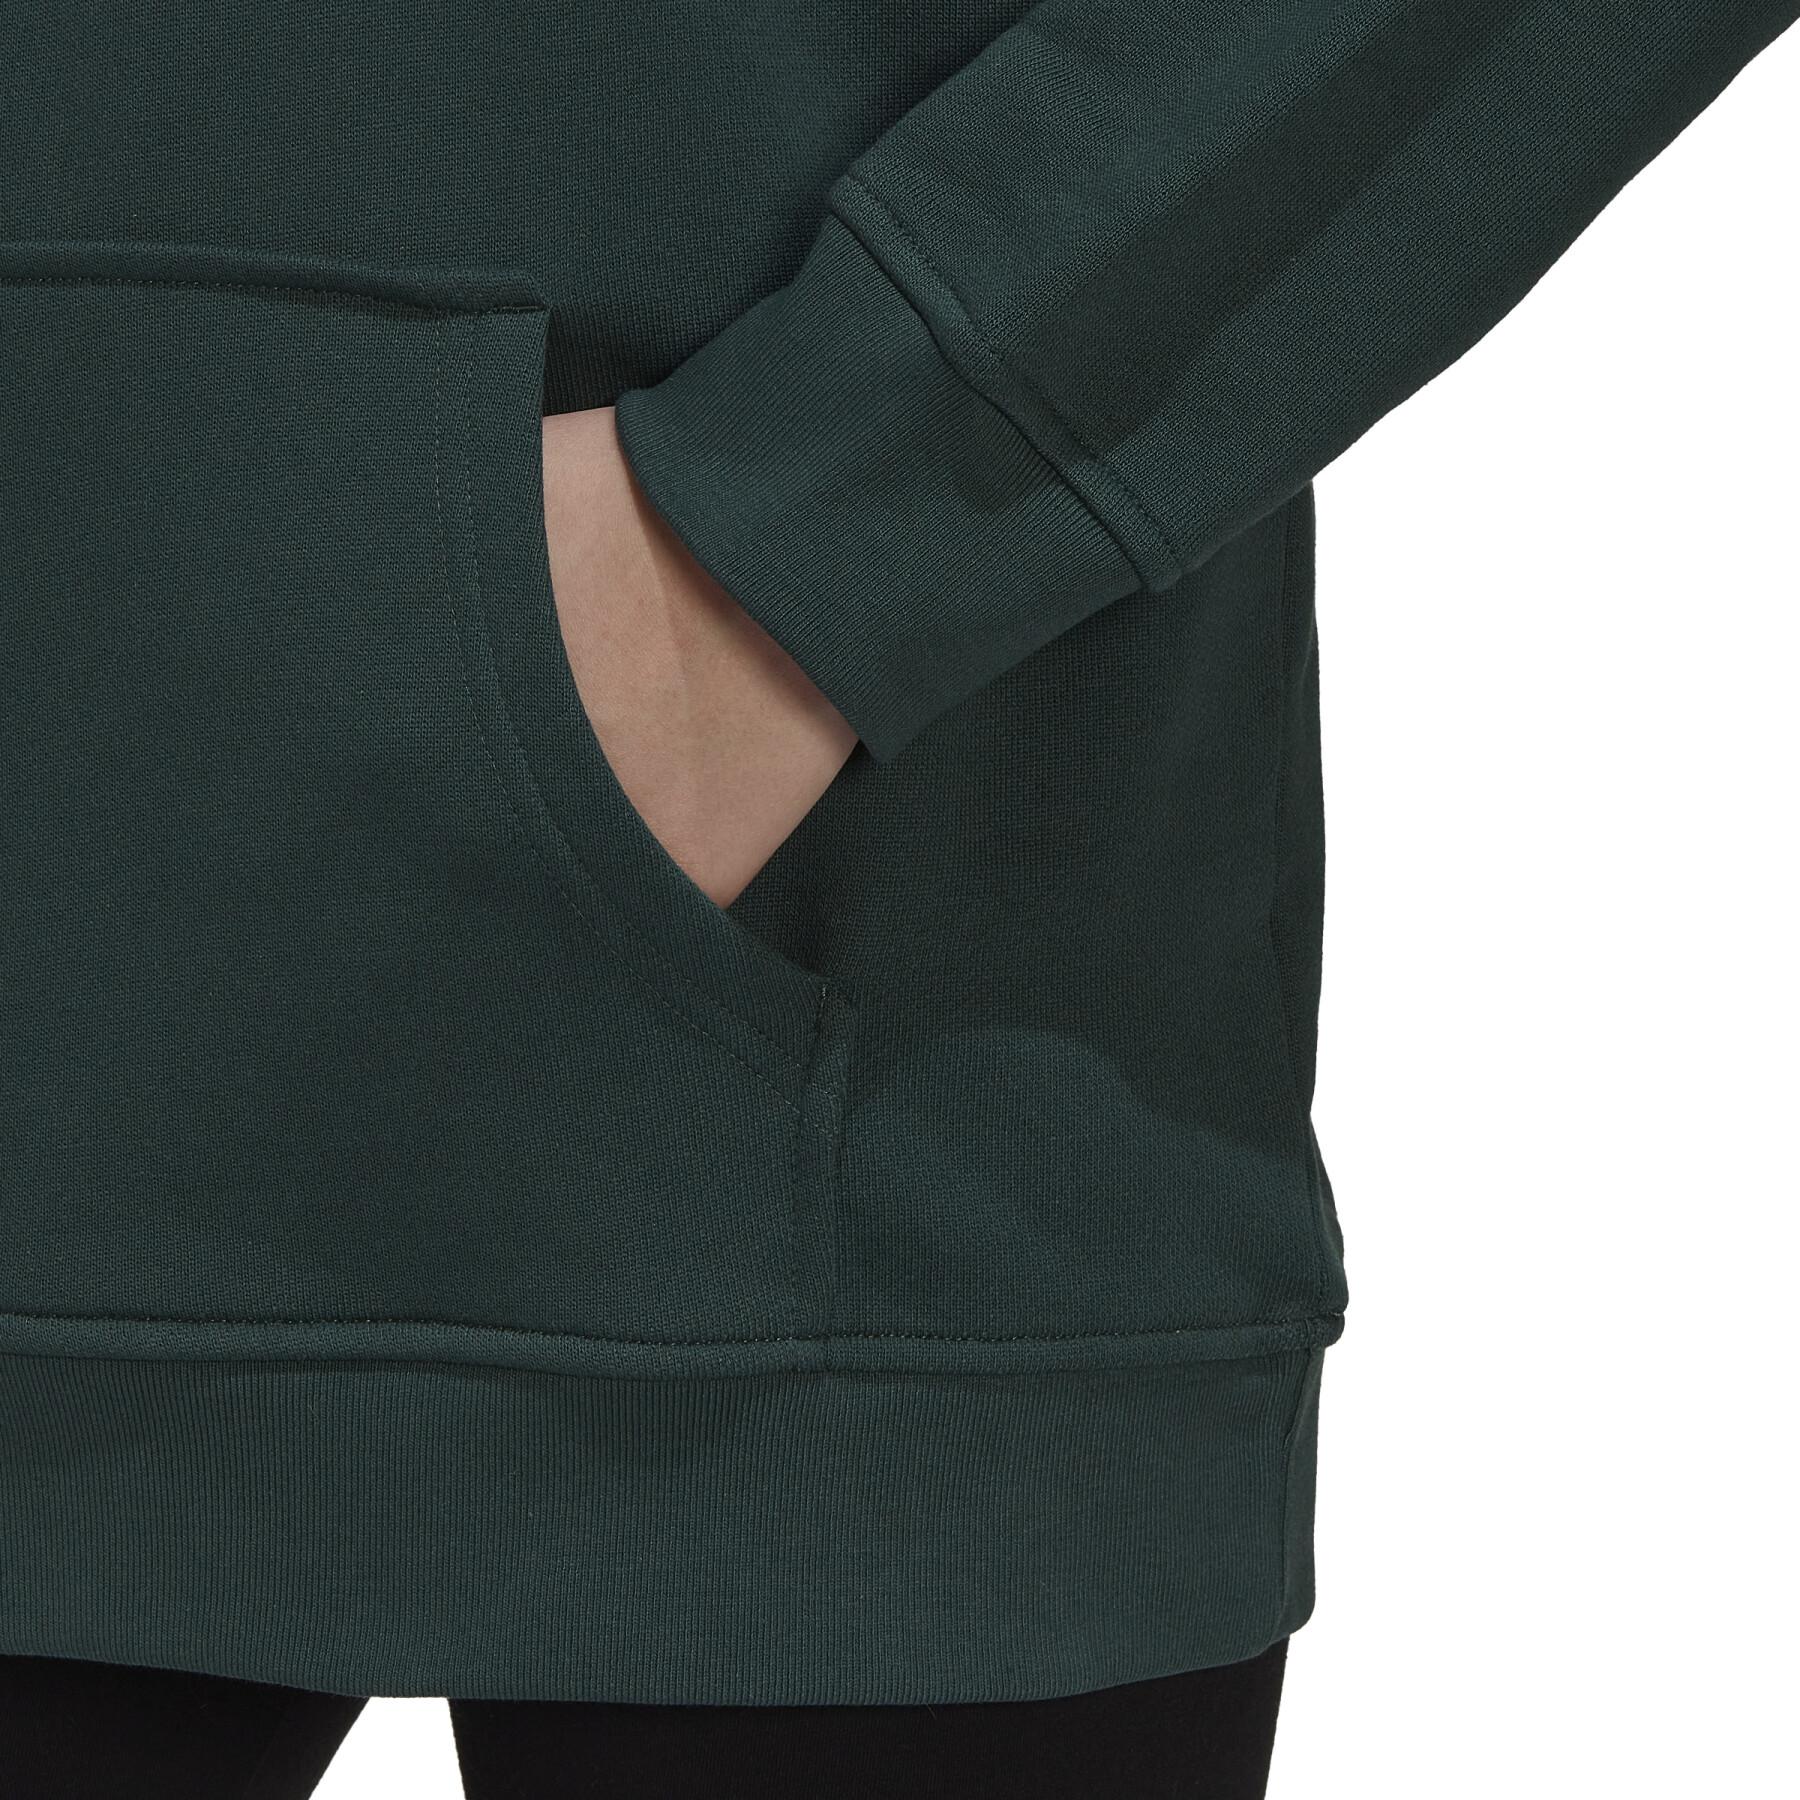 Women's hooded sweatshirt adidas Originals Trefoil Adicolor